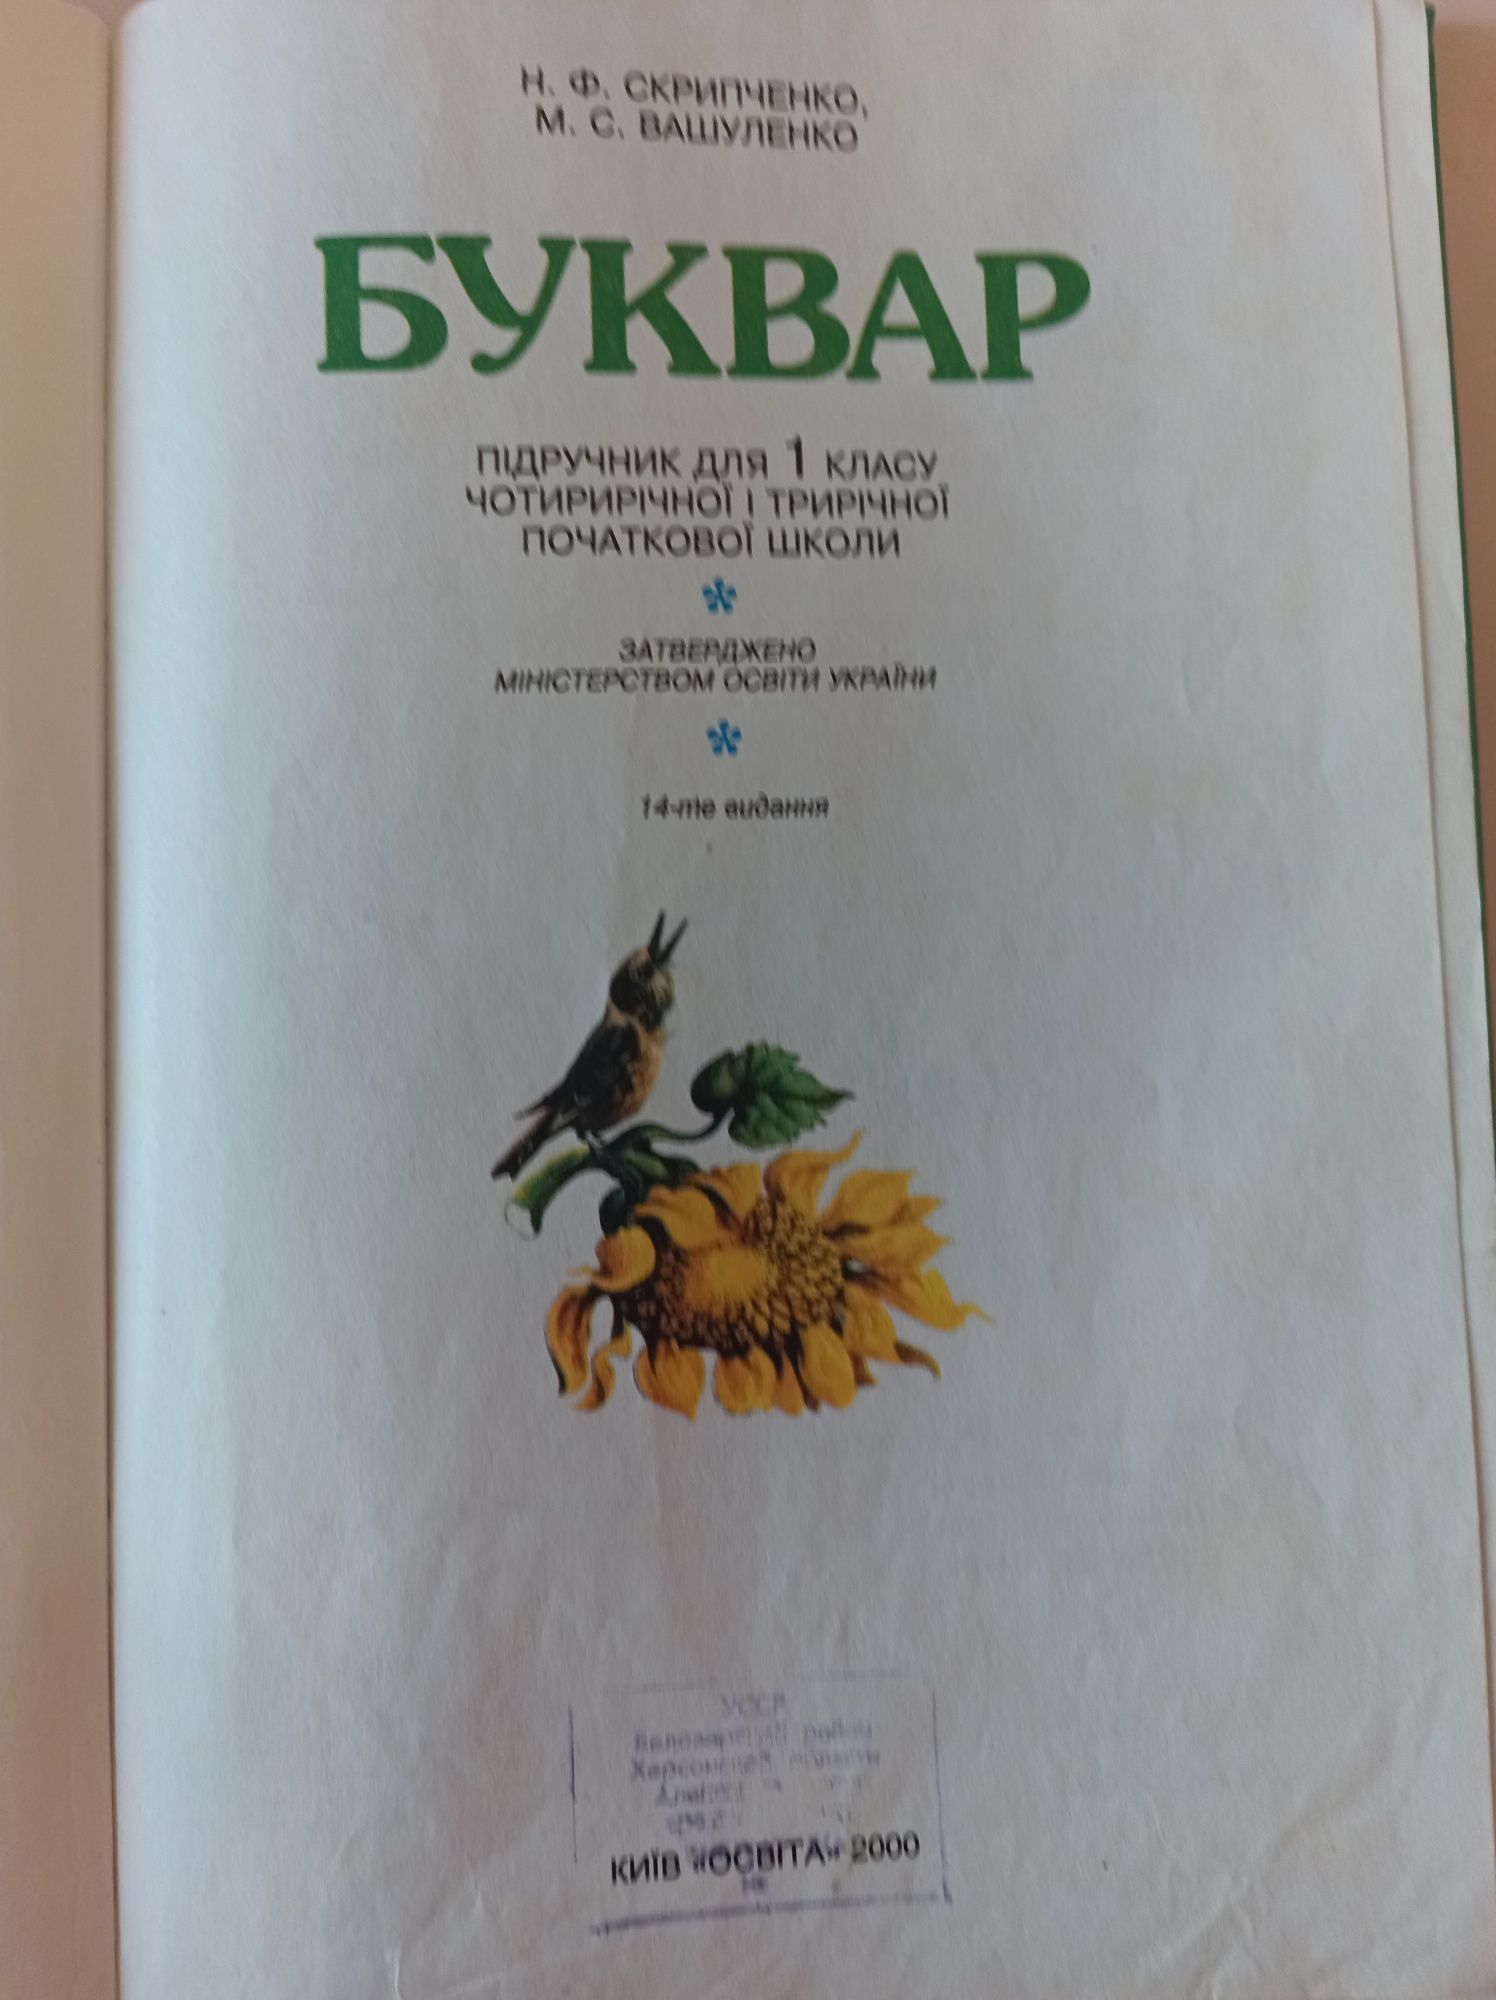 Буквар 2000 р. Н. Ф. Скрипченко 14 видання